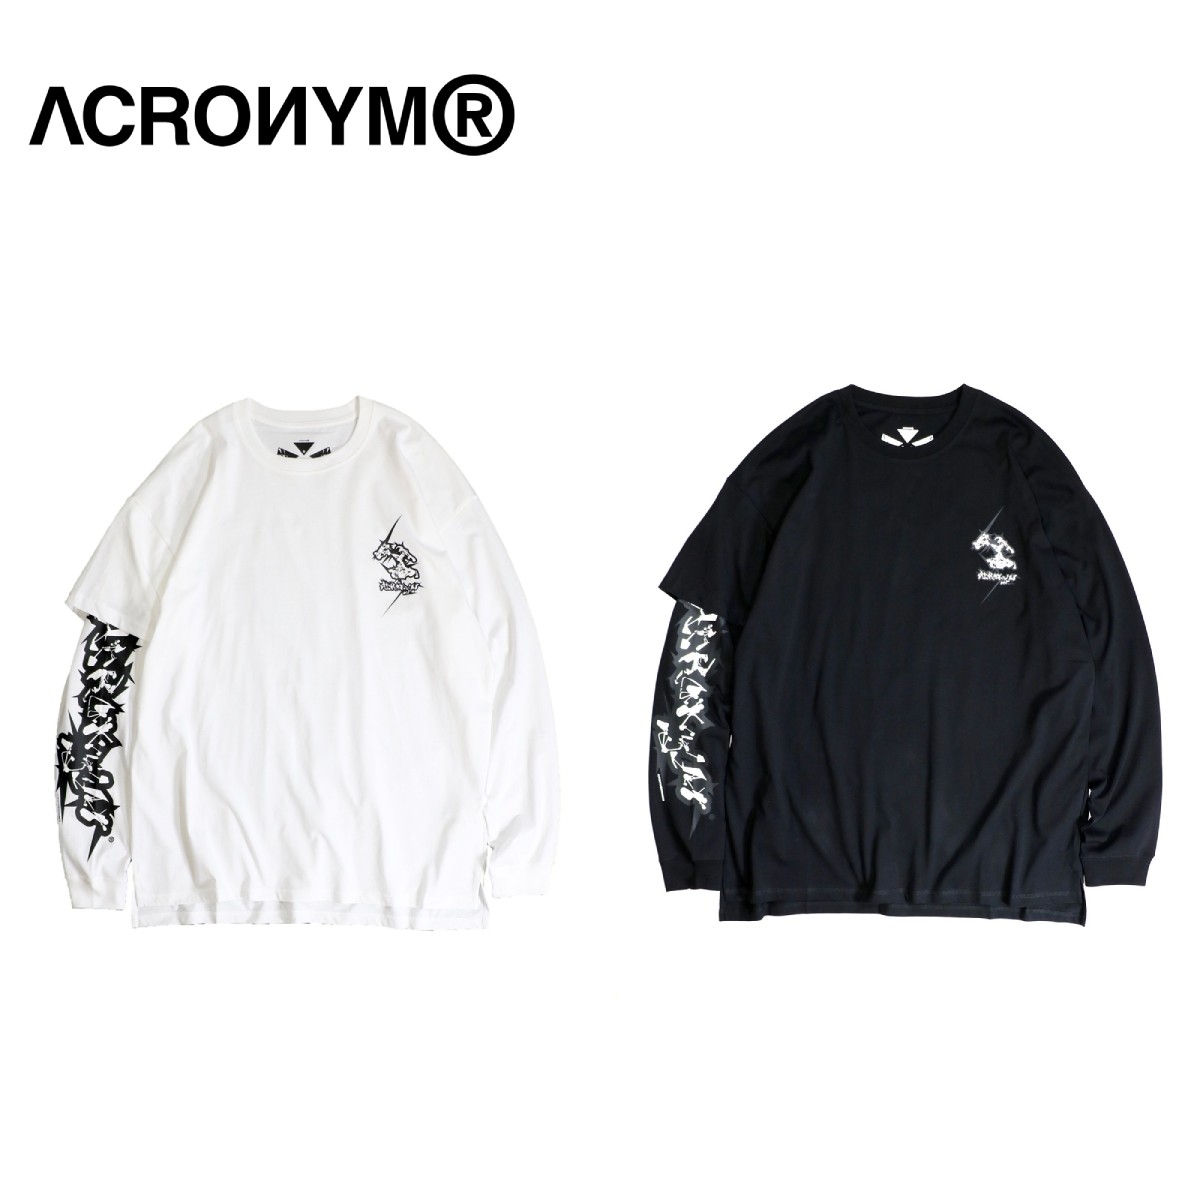 ACRONYM(アクロニウム) S29-PR-A Organic Cotton Long Sleeve  T-shirt-Digital-Mountain ACRONYM S29-PR-A サイズL アクロニウム